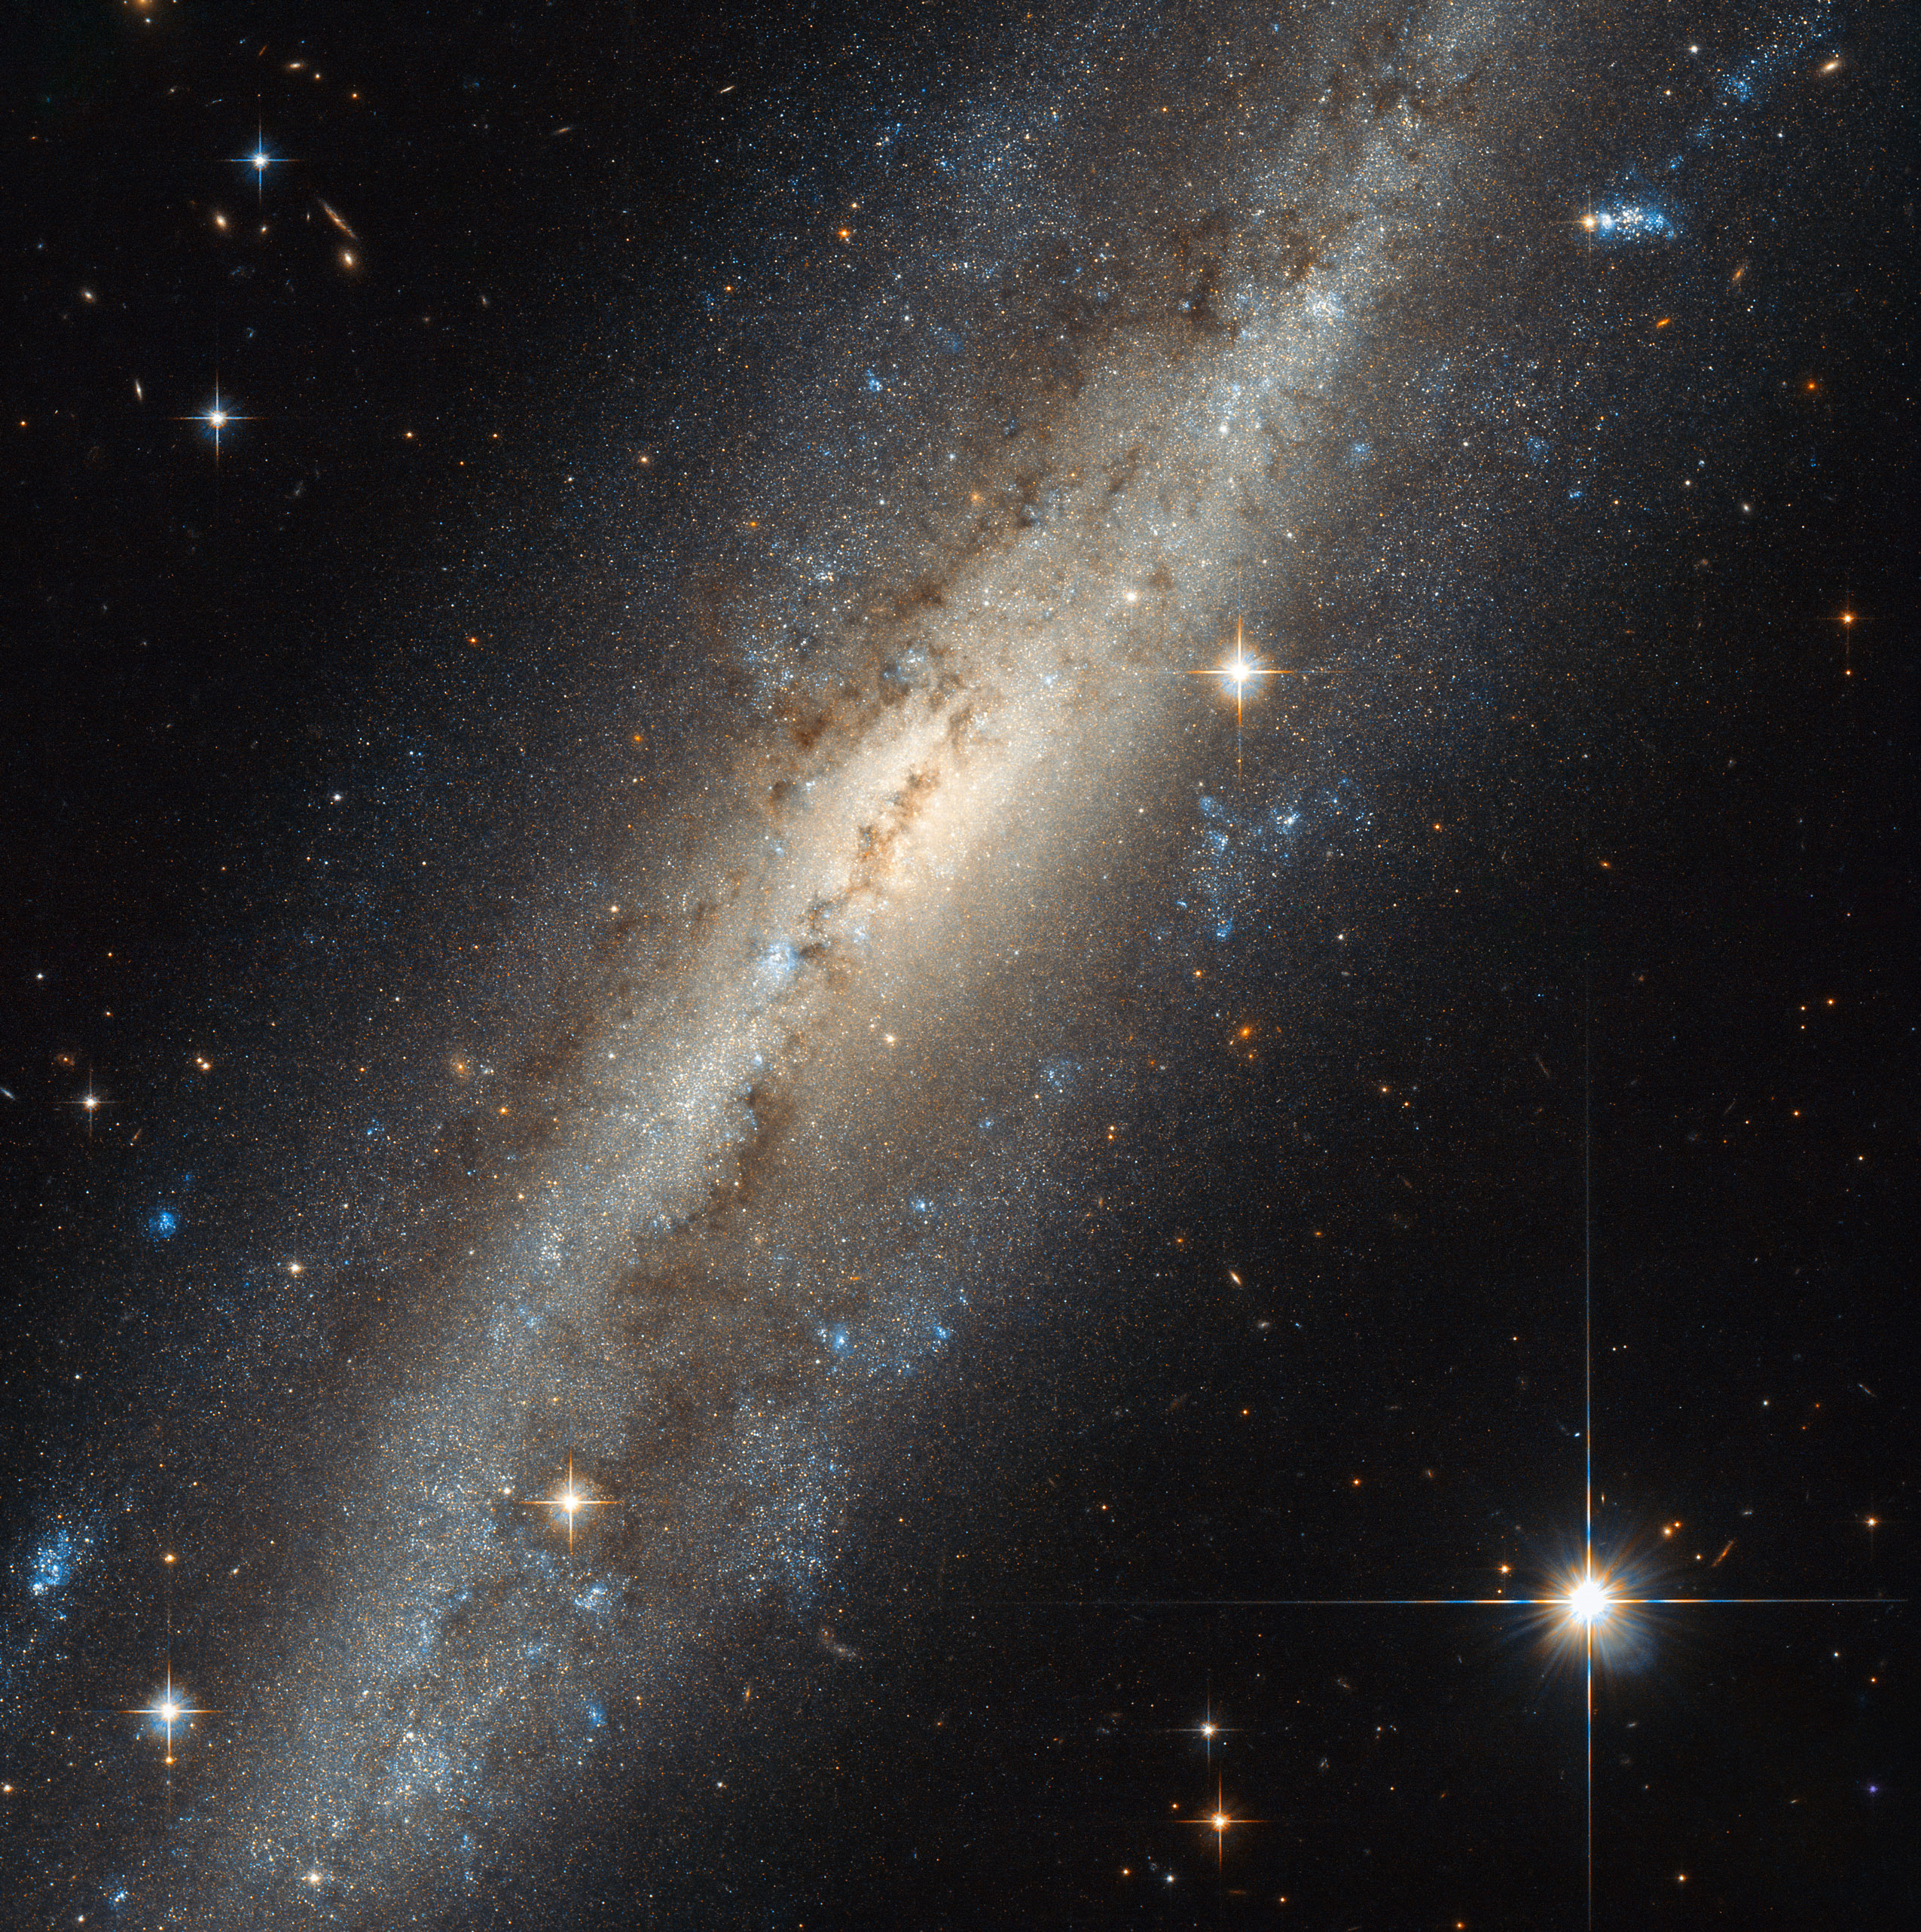 andromeda galaxy through hubble